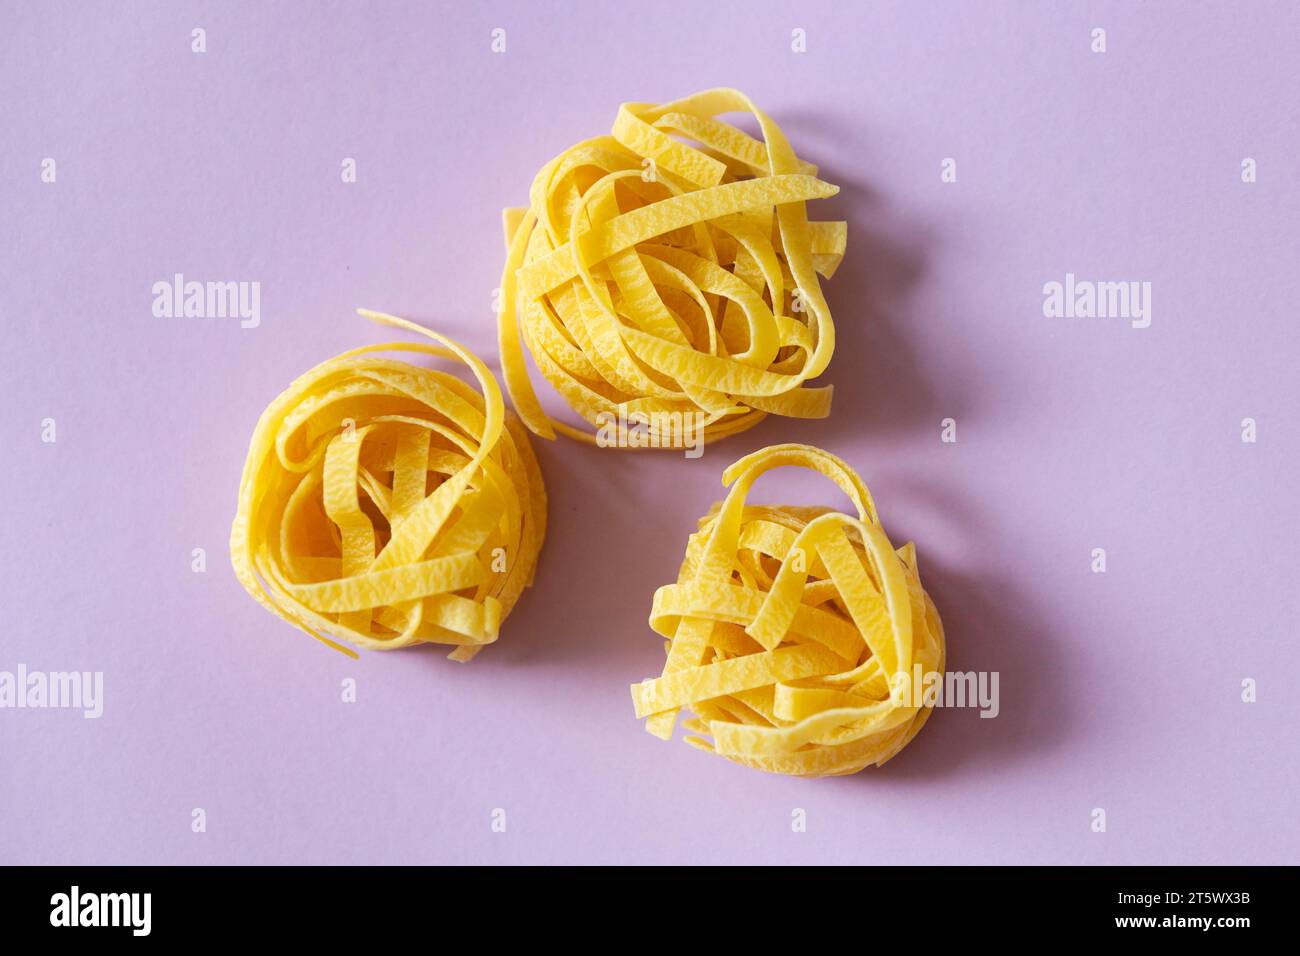 Sphagetti tagliatelle pasta on the pink background Stock Photo